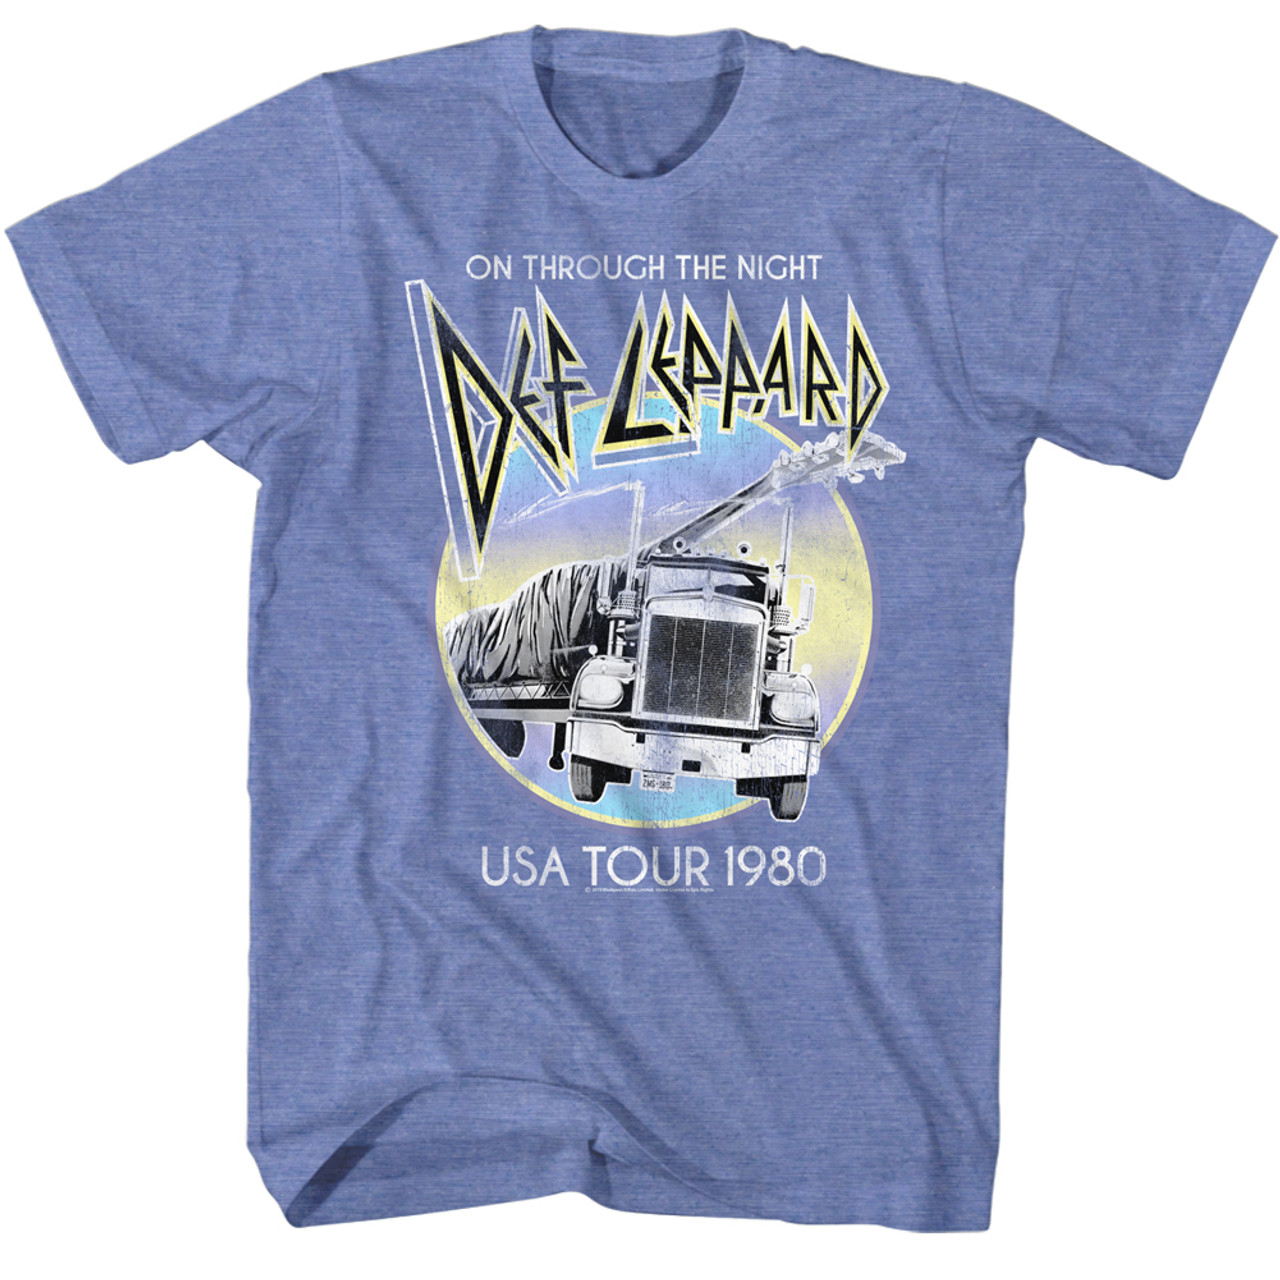 Def Leppard On Through The Night USA Tour 1980 T-Shirt